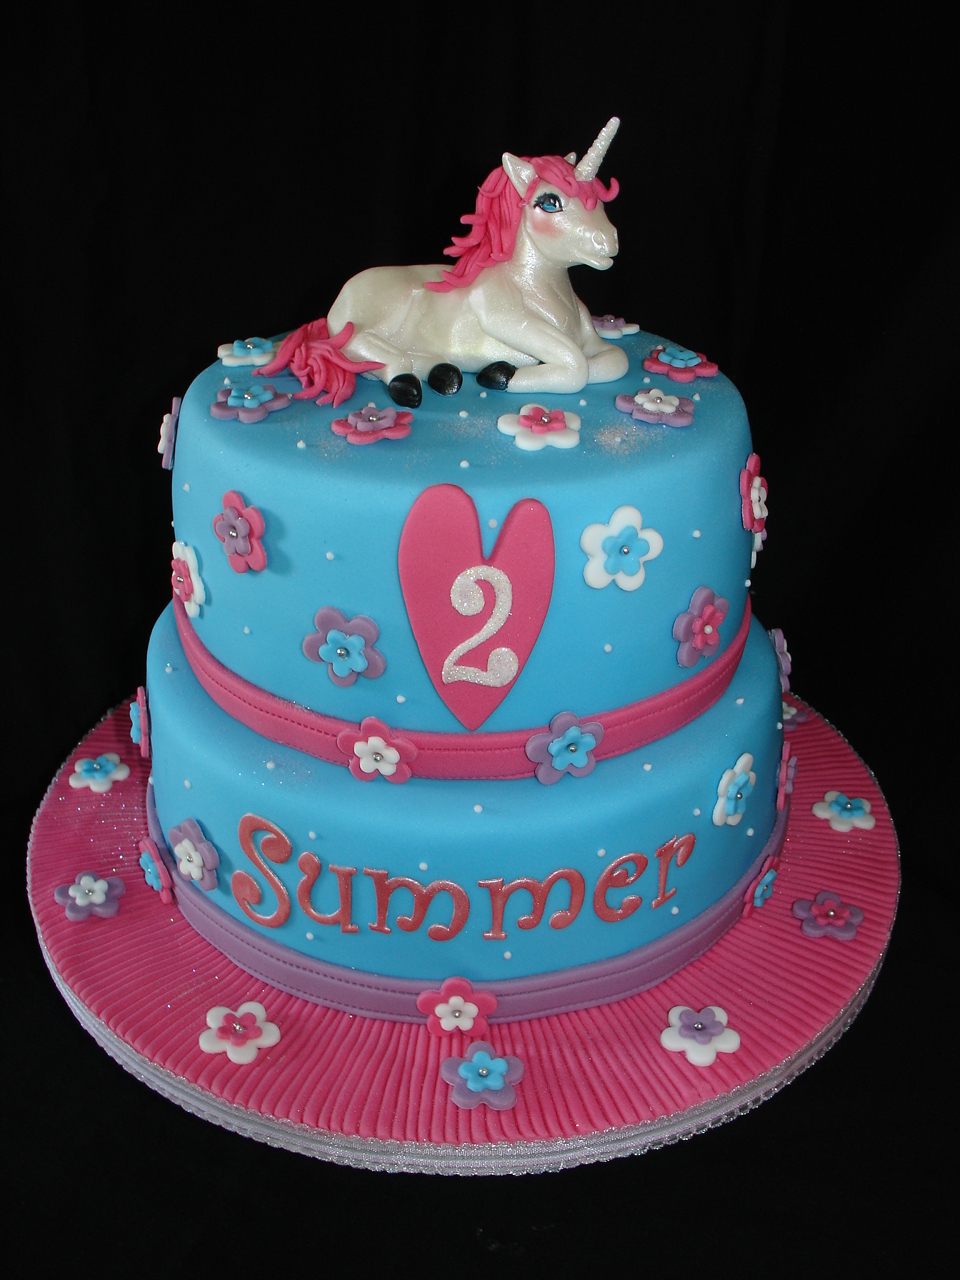 Unicorn Cakes - Decoration Ideas | Little Birthday Cakes